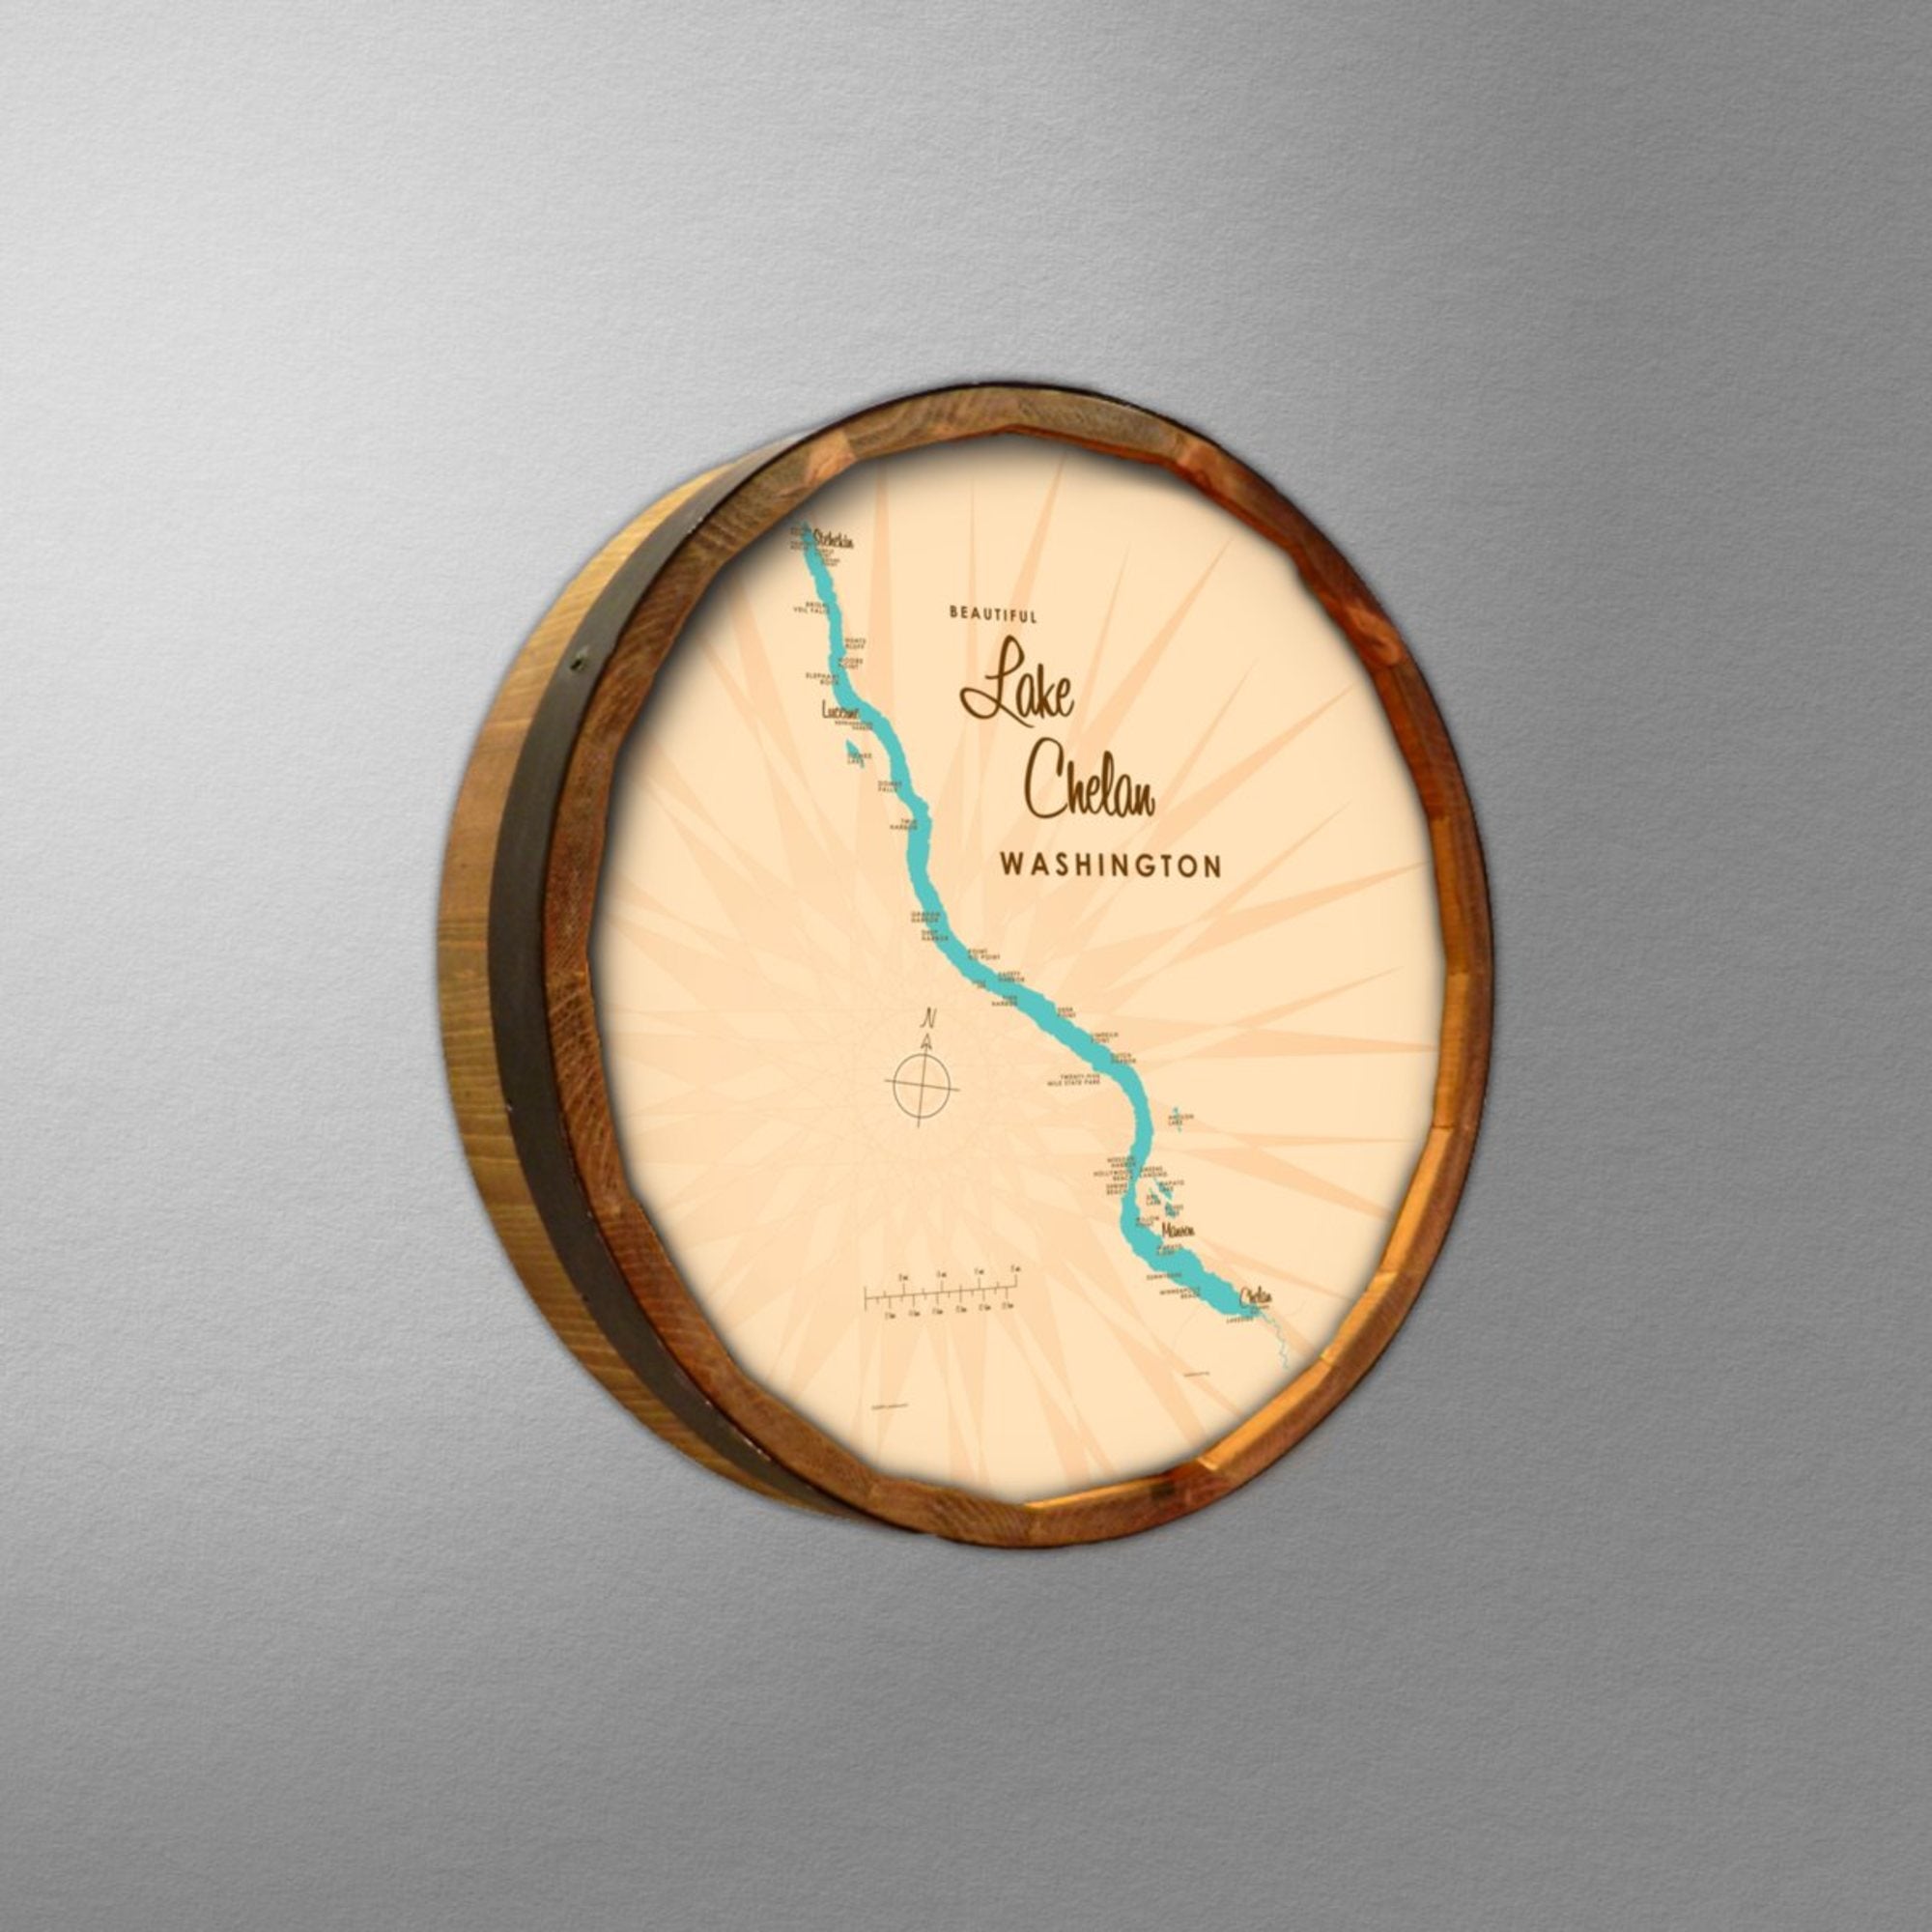 Lake Chelan Washington, Barrel End Map Art